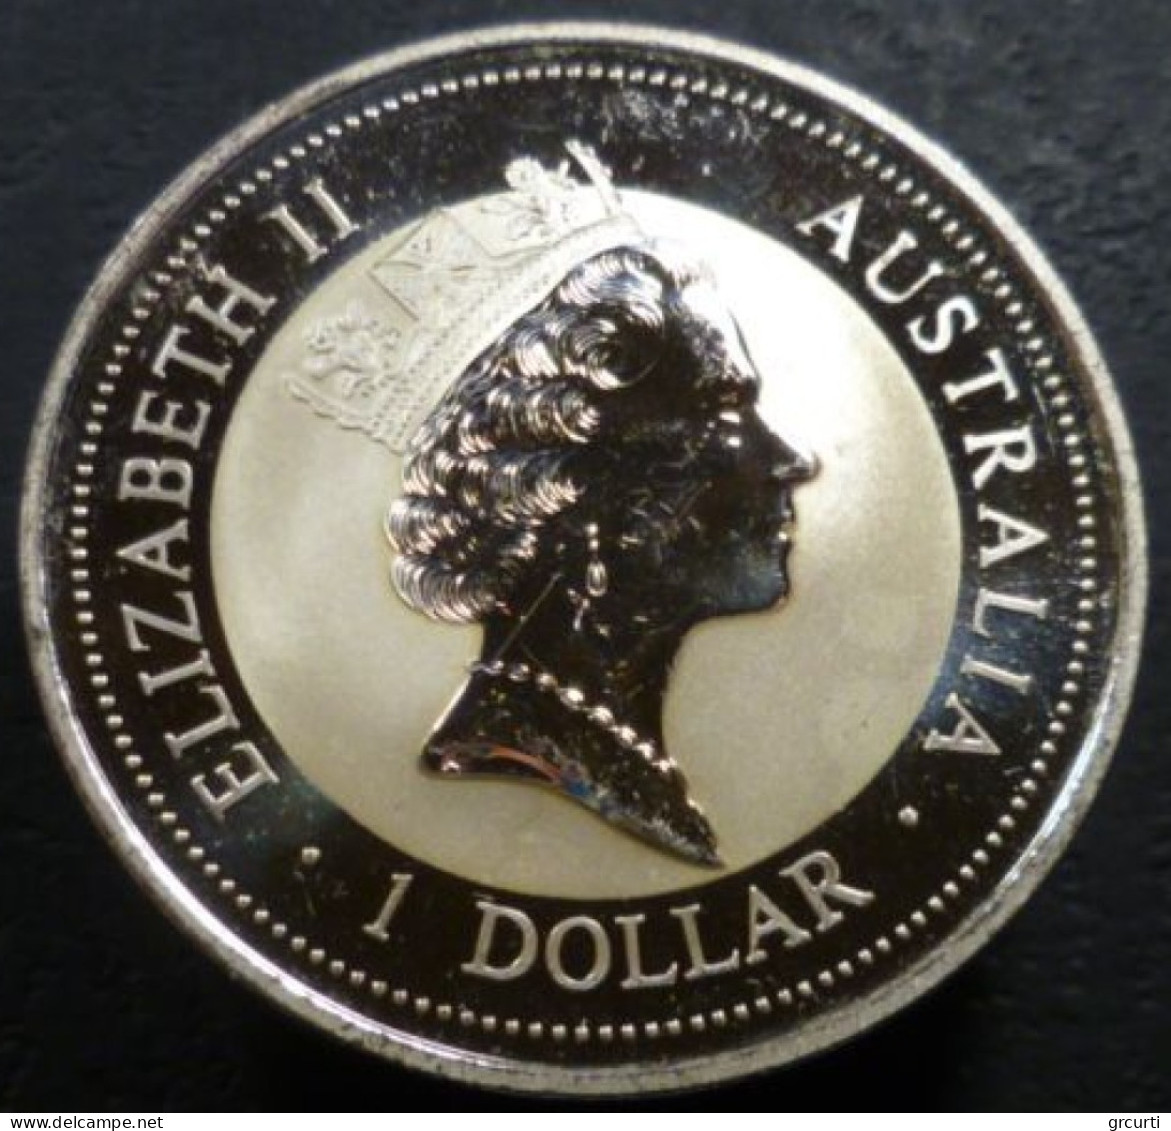 Australia - 1 Dollar 1997 - Kookaburra - KM# 318 - Silver Bullions